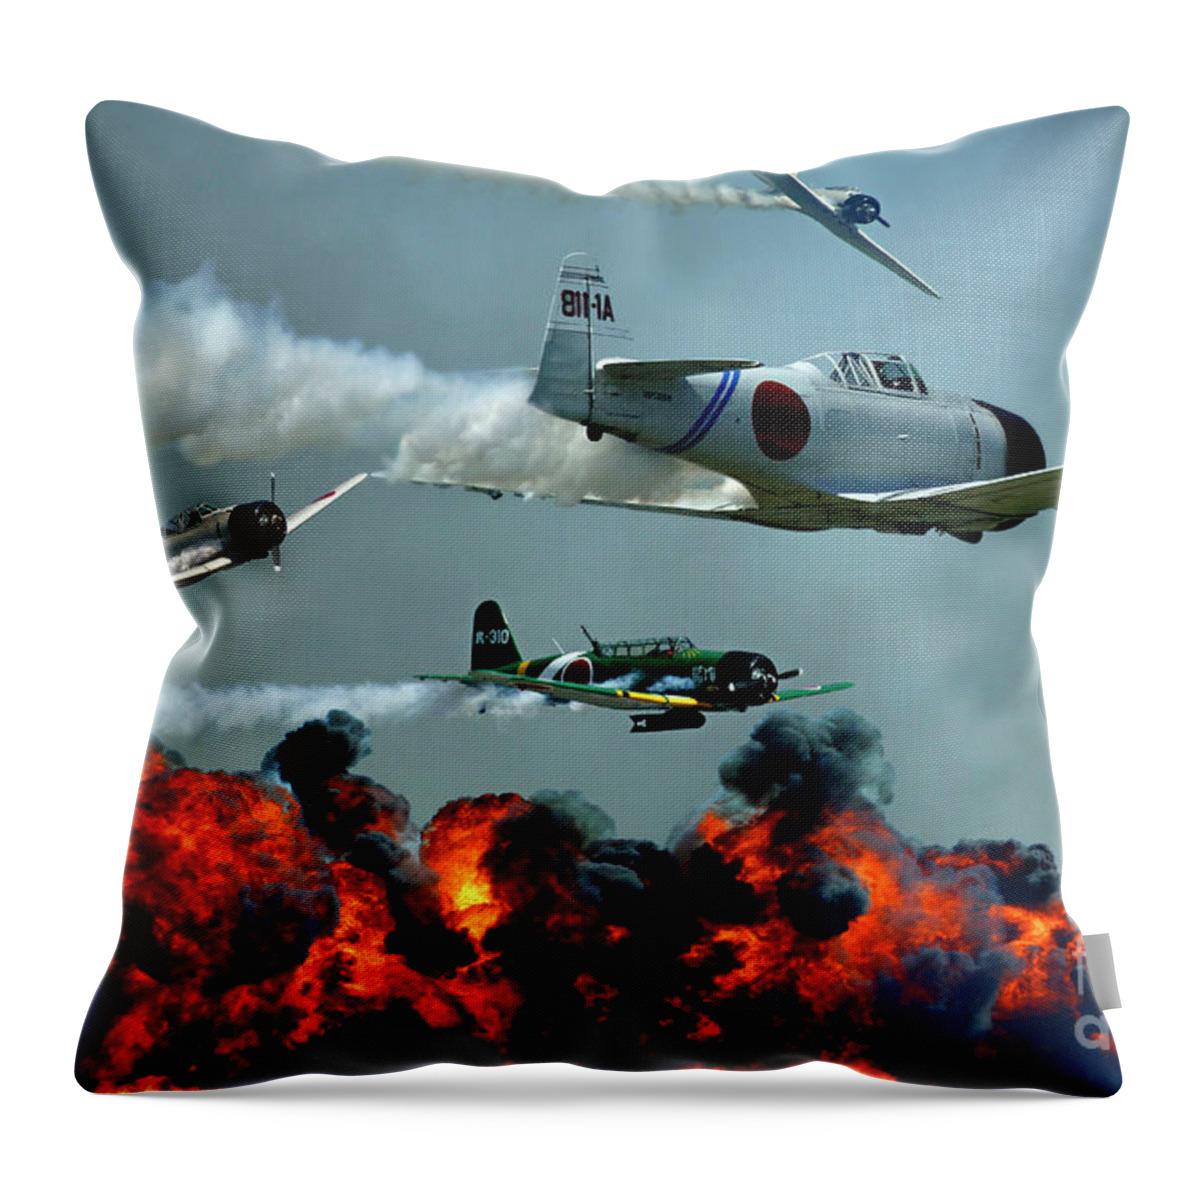 Plane Throw Pillow featuring the photograph Tora Tora Tora by Bob Christopher